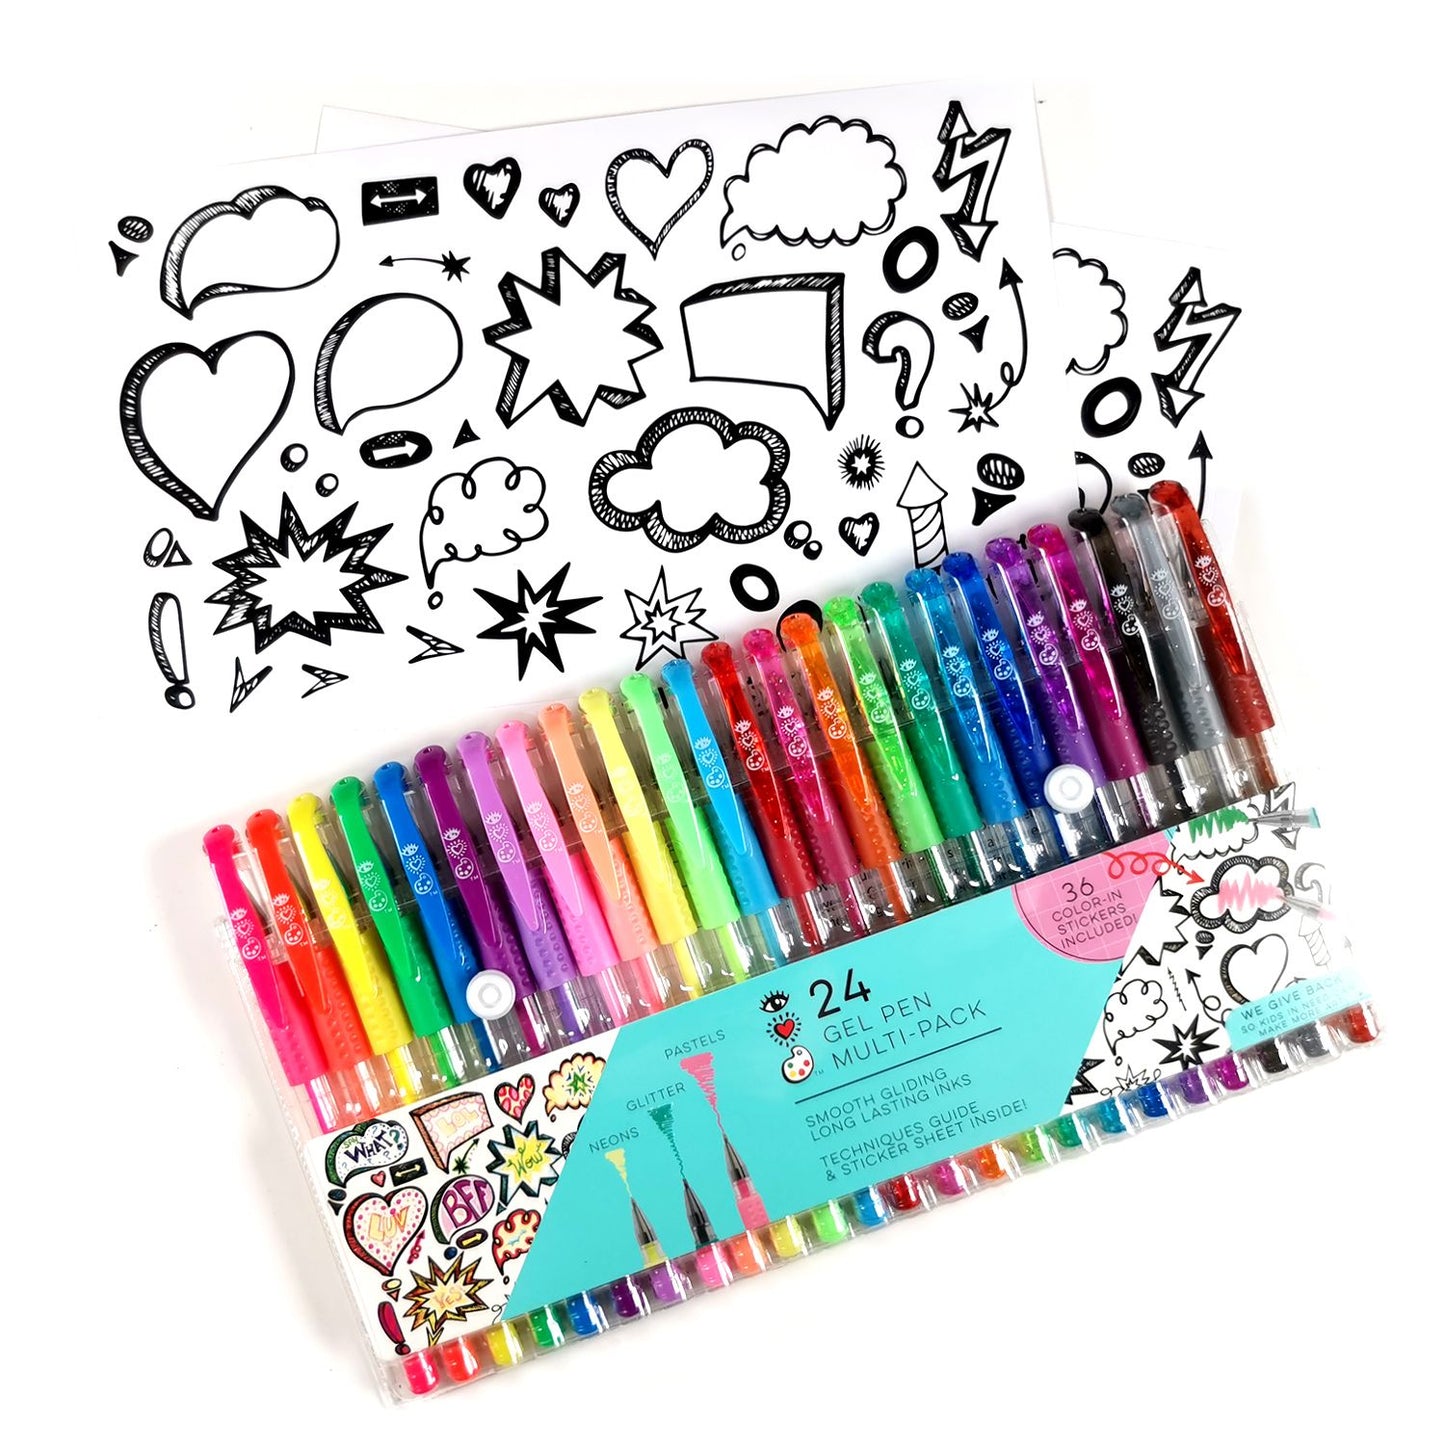 iHeart Art 24 Gel Pen Multi-Pack - Neon, Pastel, Glitter